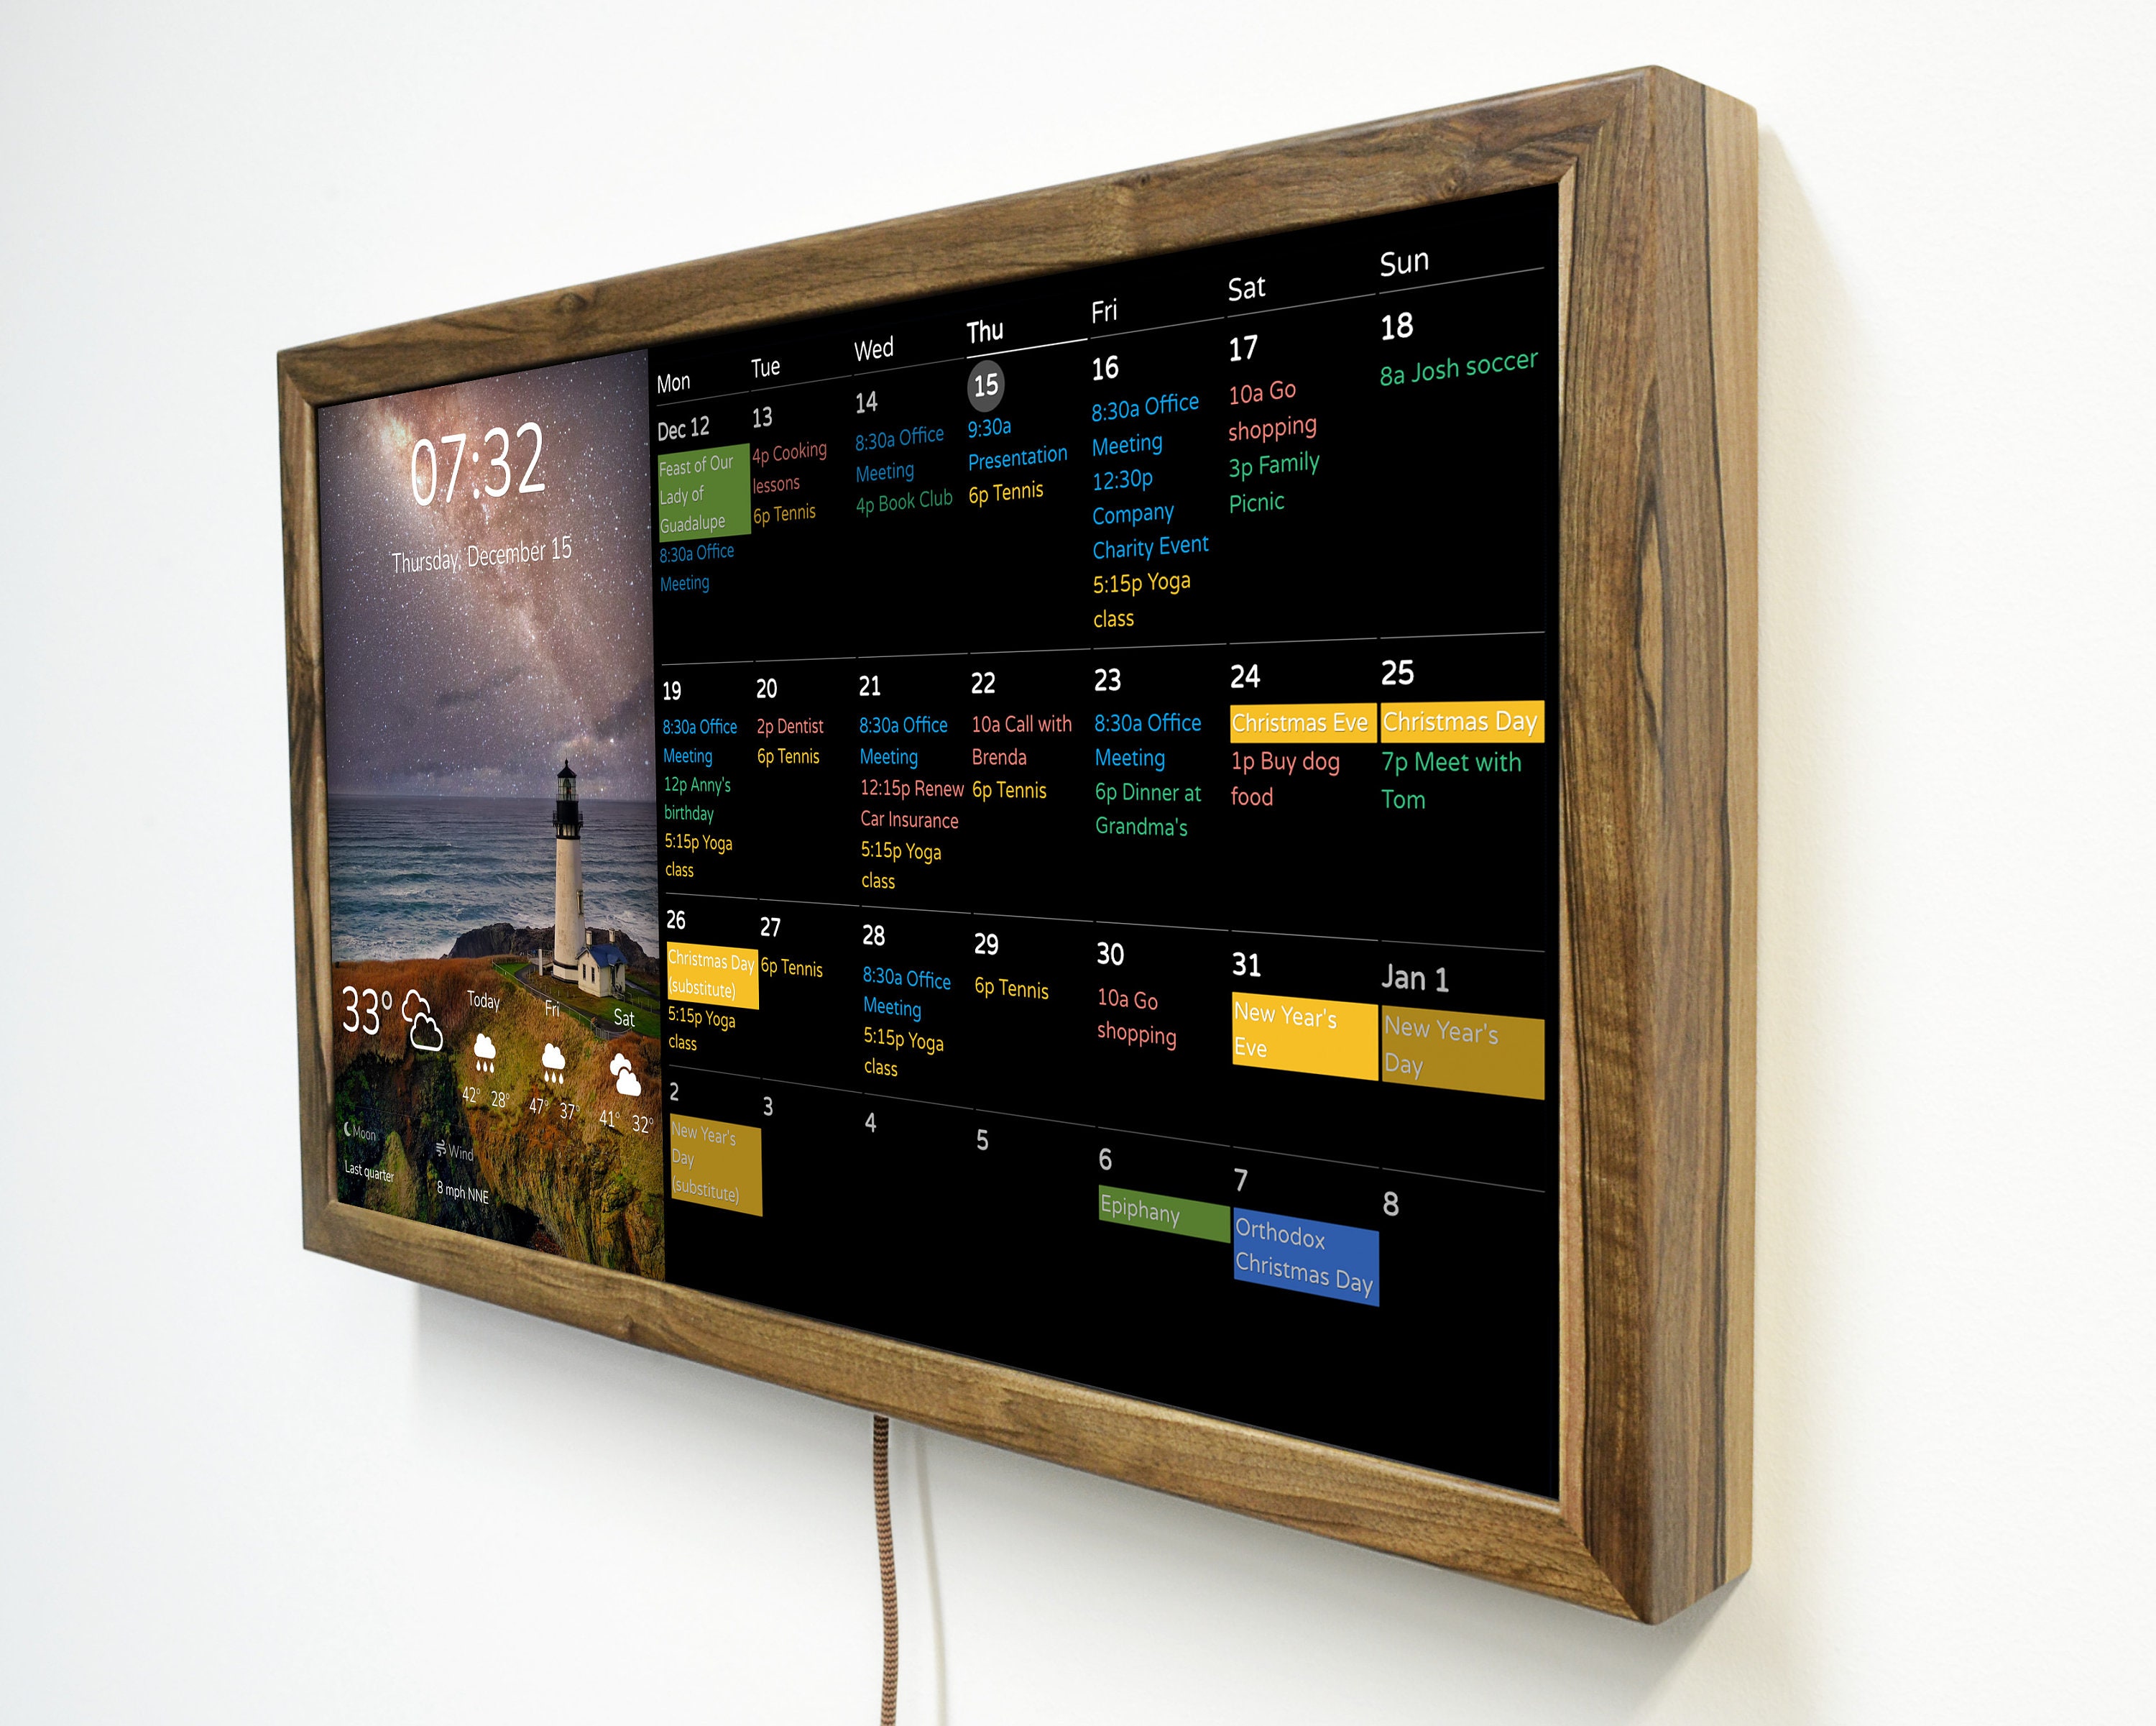 Mini Wifi Wetters tation Prognostiker Digitaluhr Kalender Outdoor